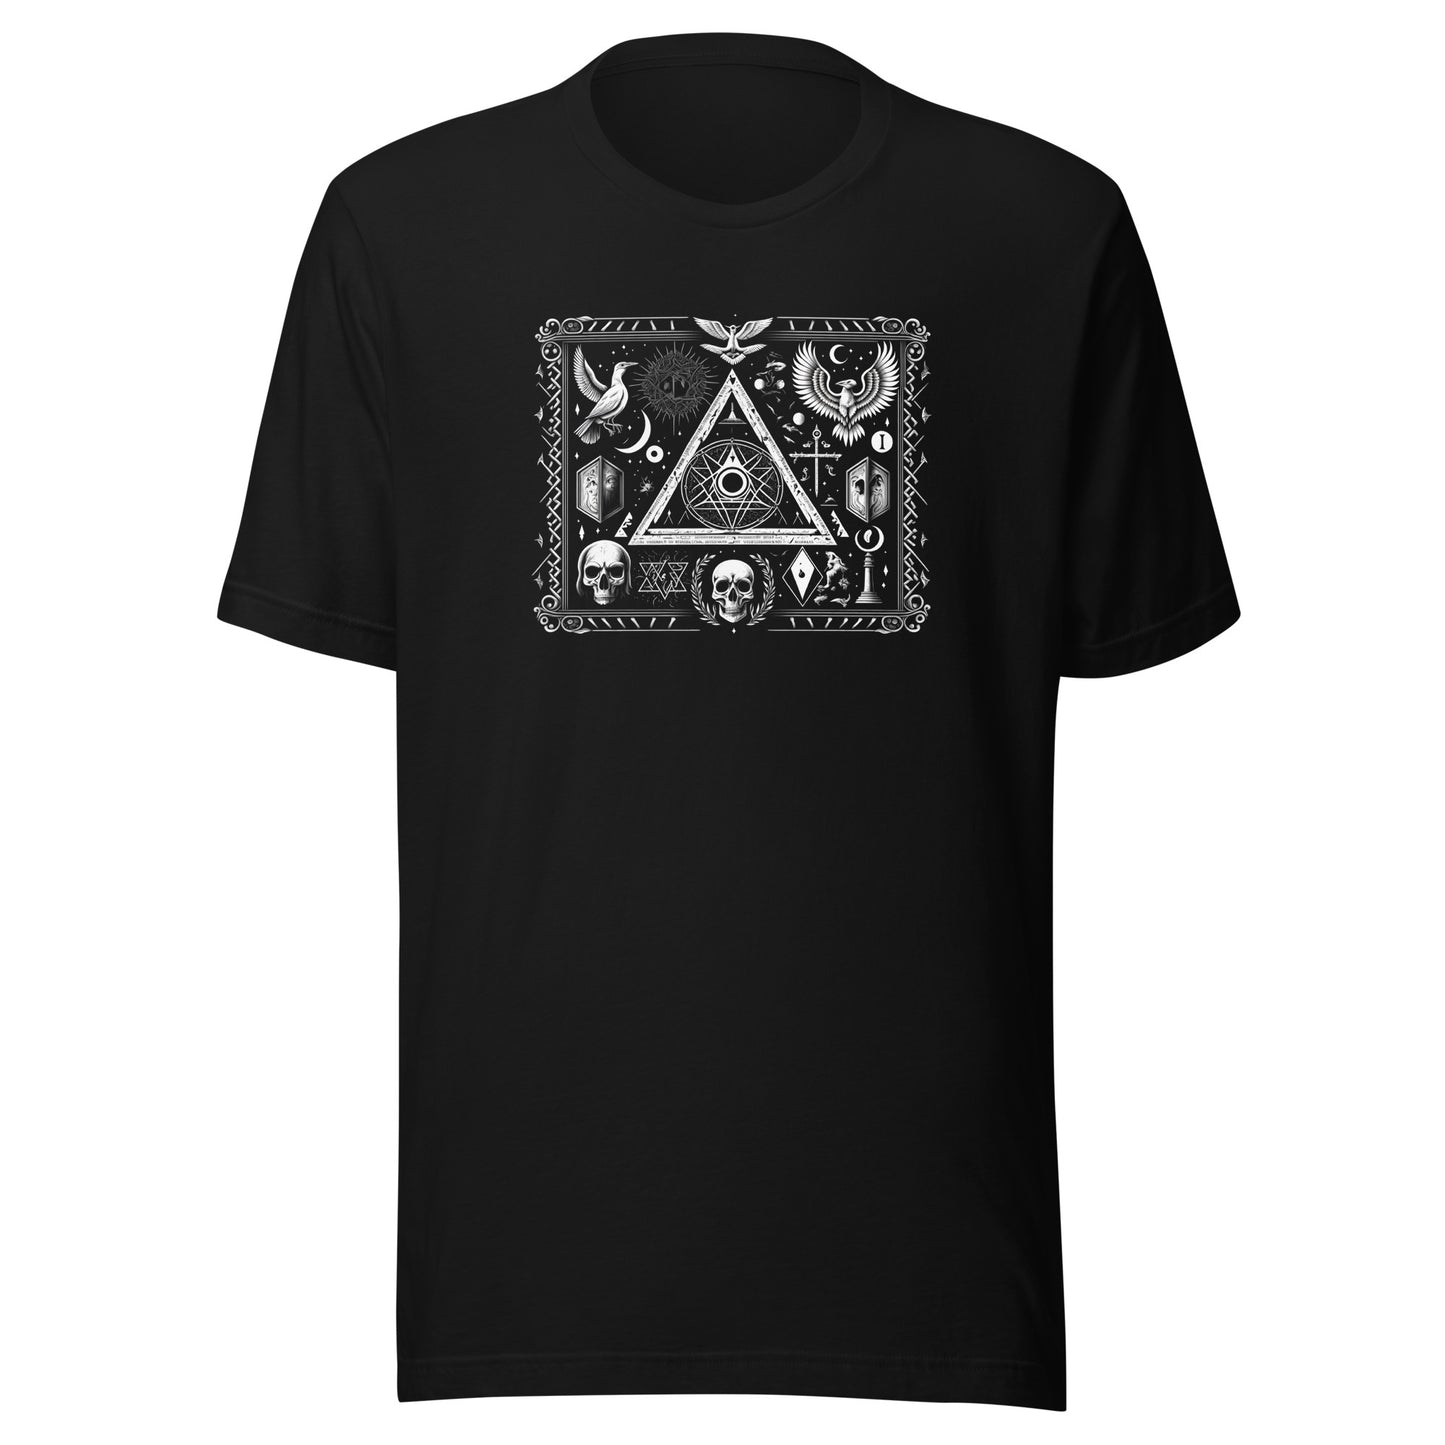 Illuminati Portal - T-Shirt